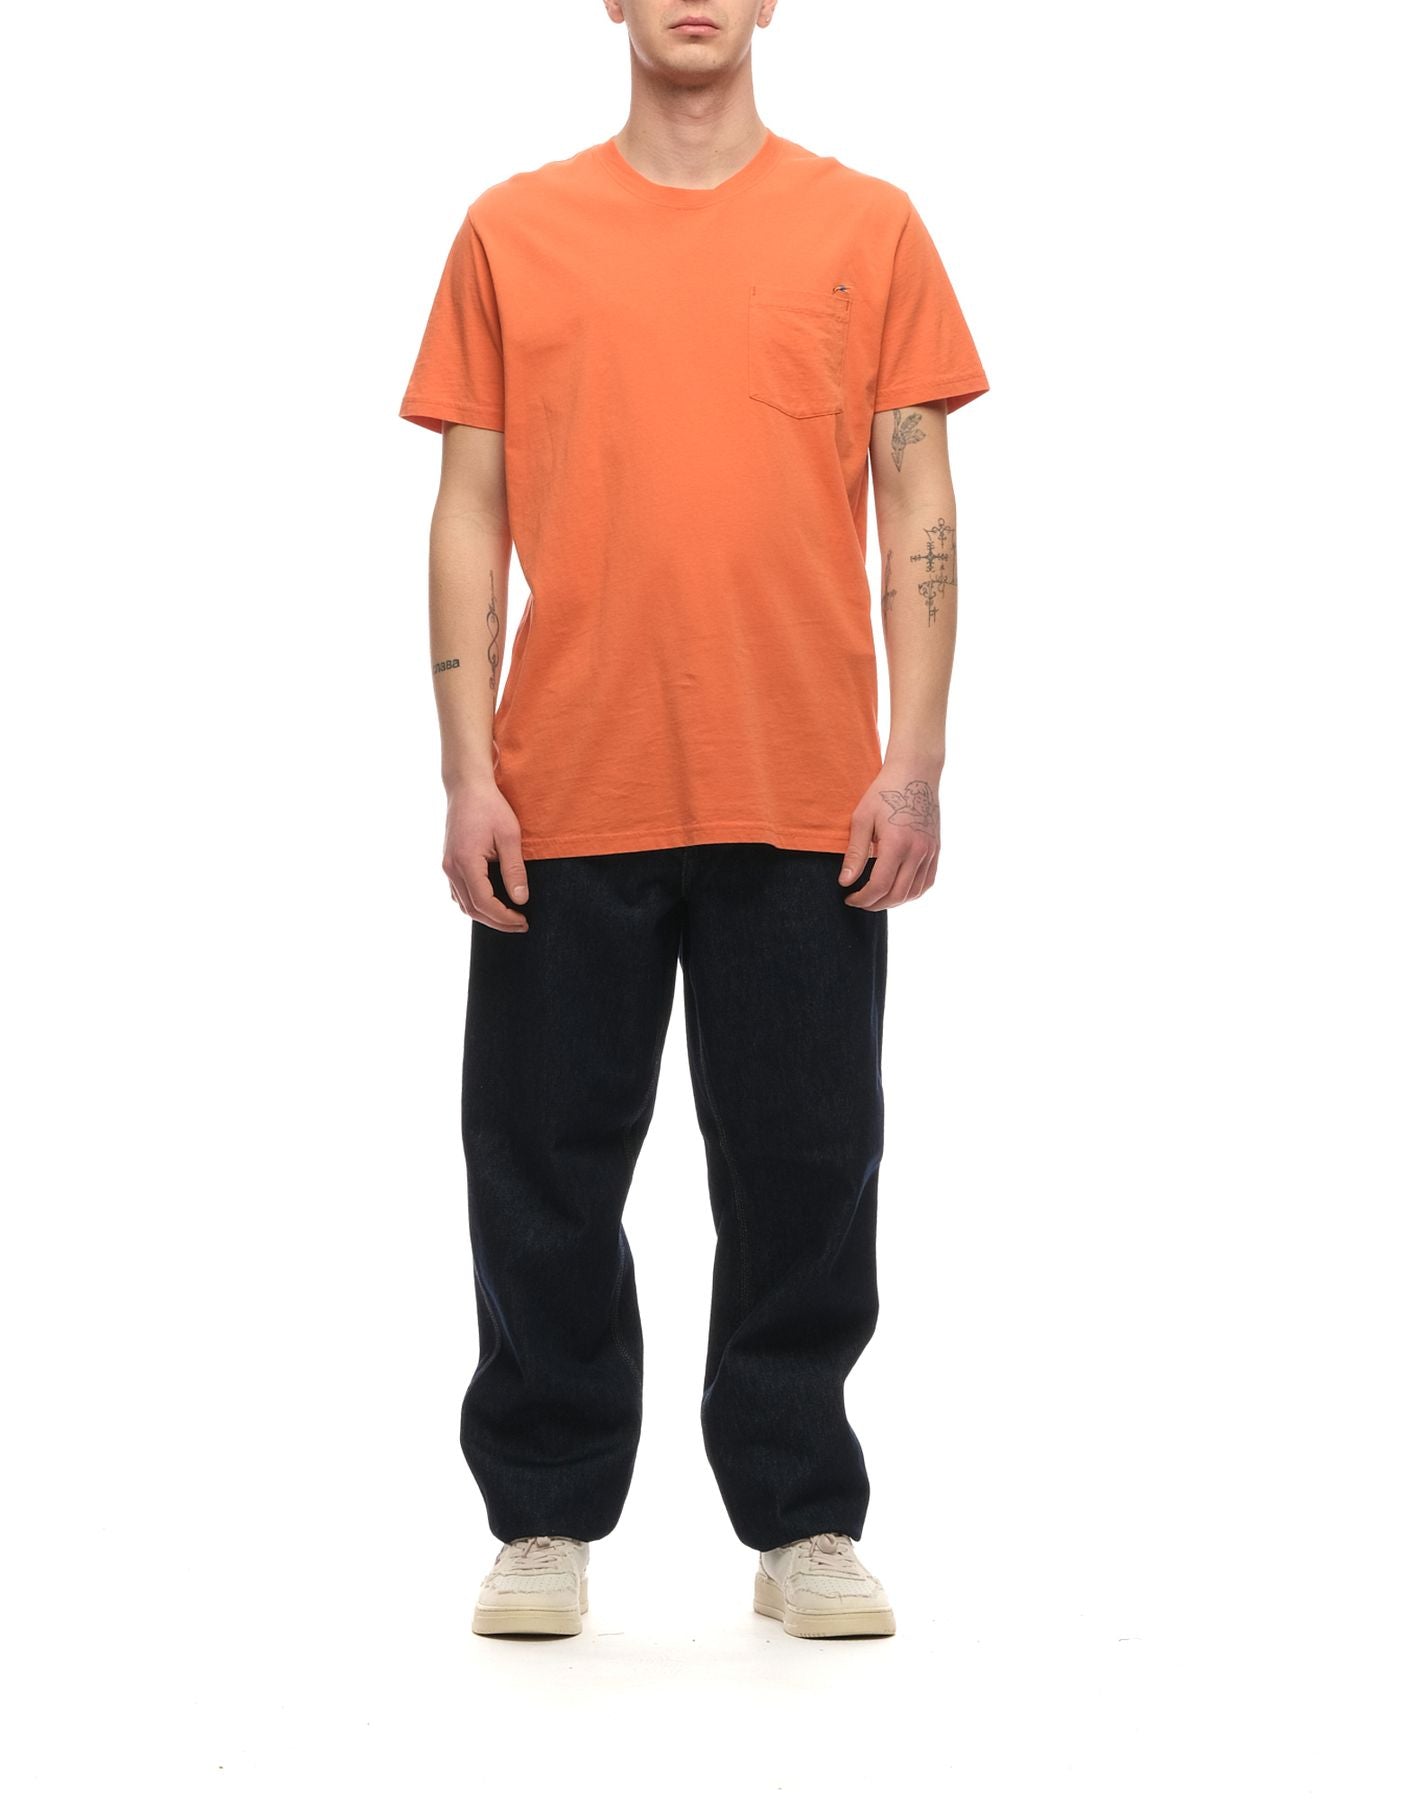 Camiseta para hombres 1317 naranja clara Revolution